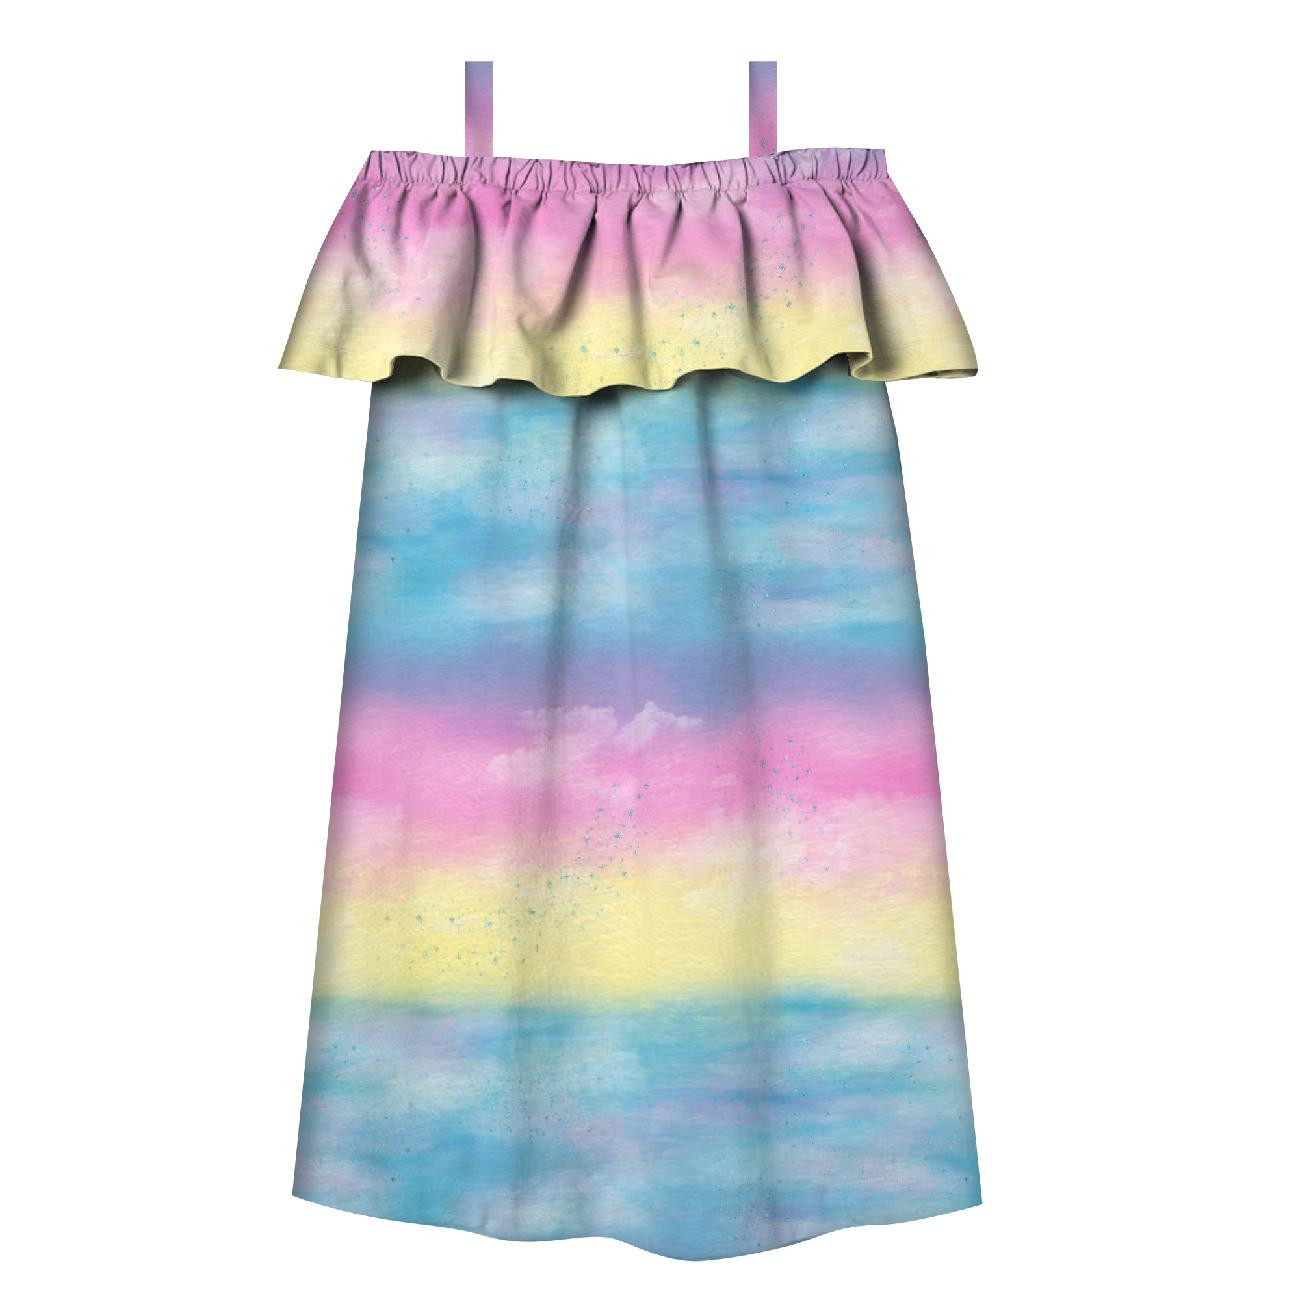 Bardot neckline dress (LILI) - RAINBOW OCEAN pat. 1 - sewing set